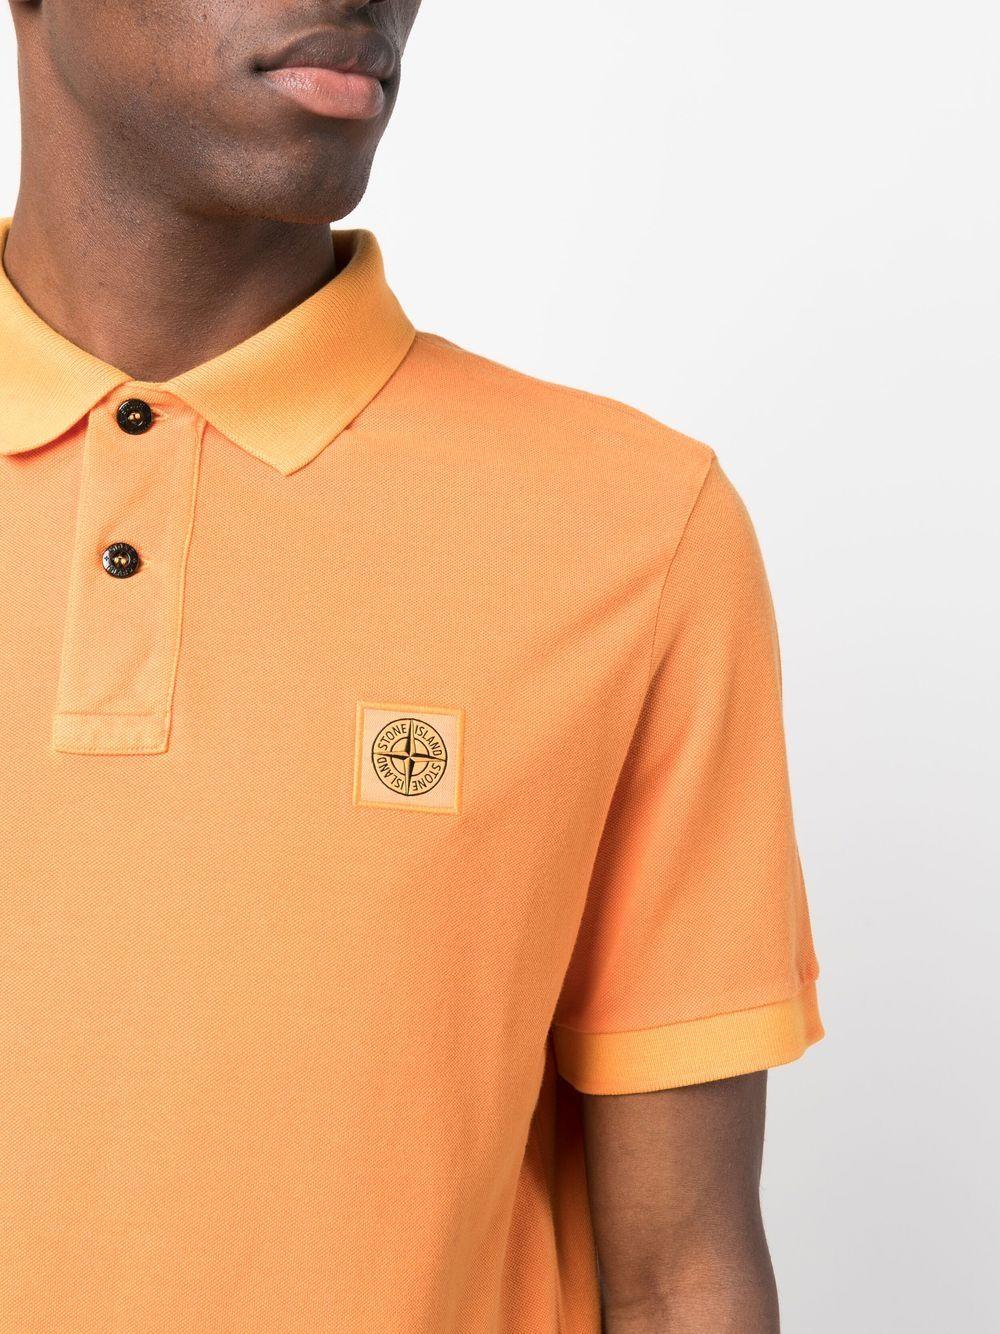 Stone Island Compass-logo Polo Shirt in Orange for Men | Lyst